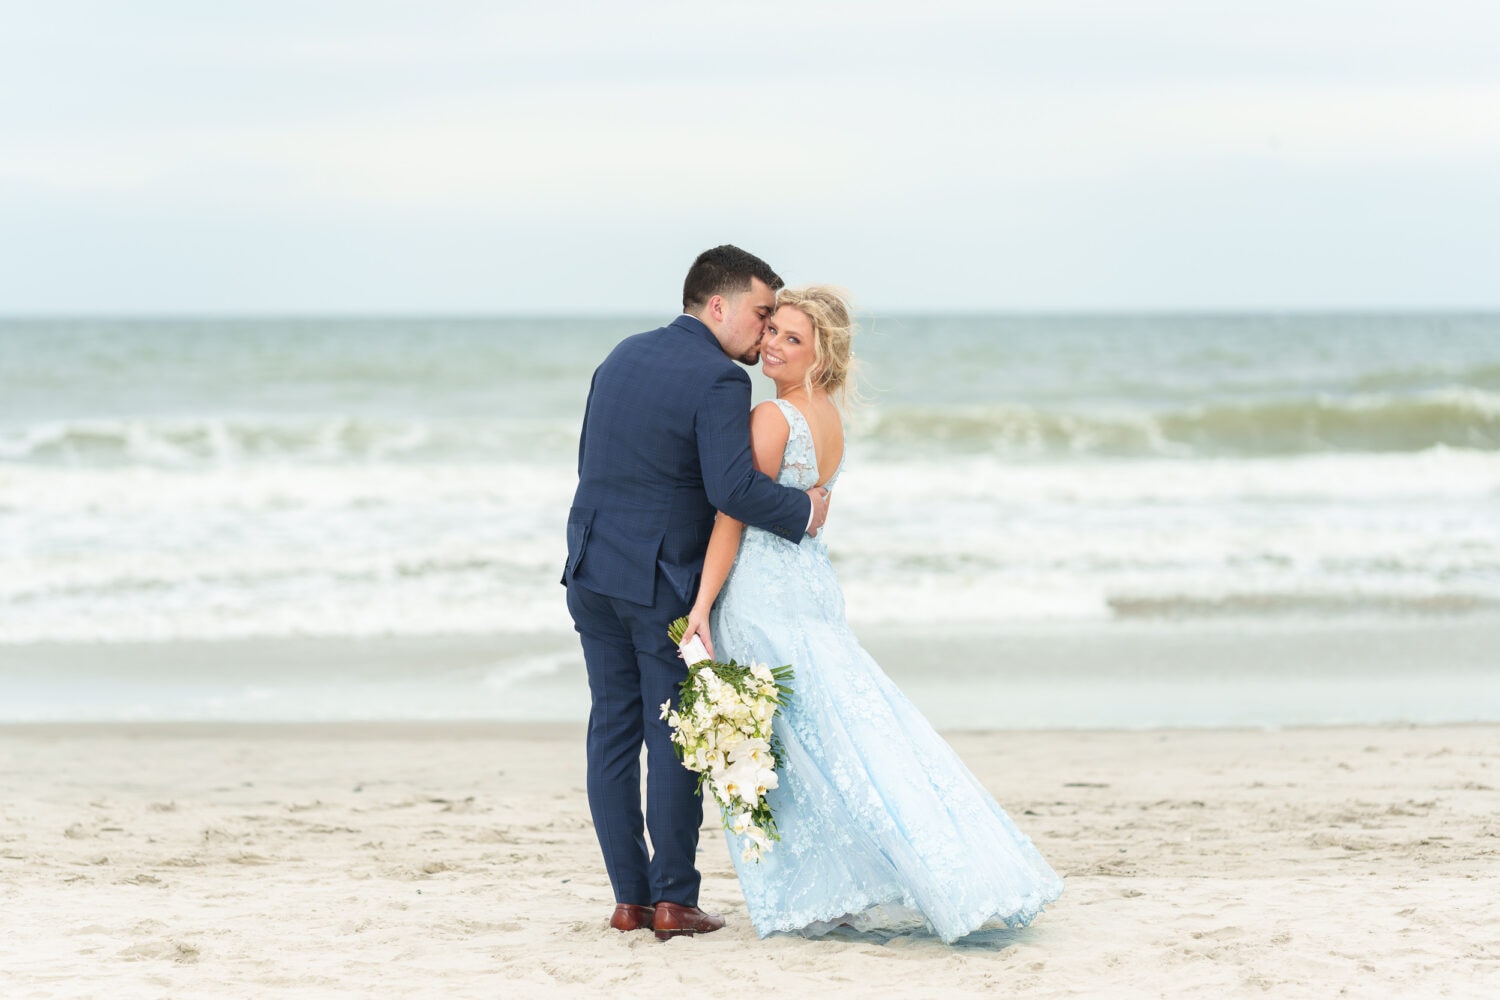 Kiss on the cheek facing the ocean - Hilton Myrtle Beach Resort